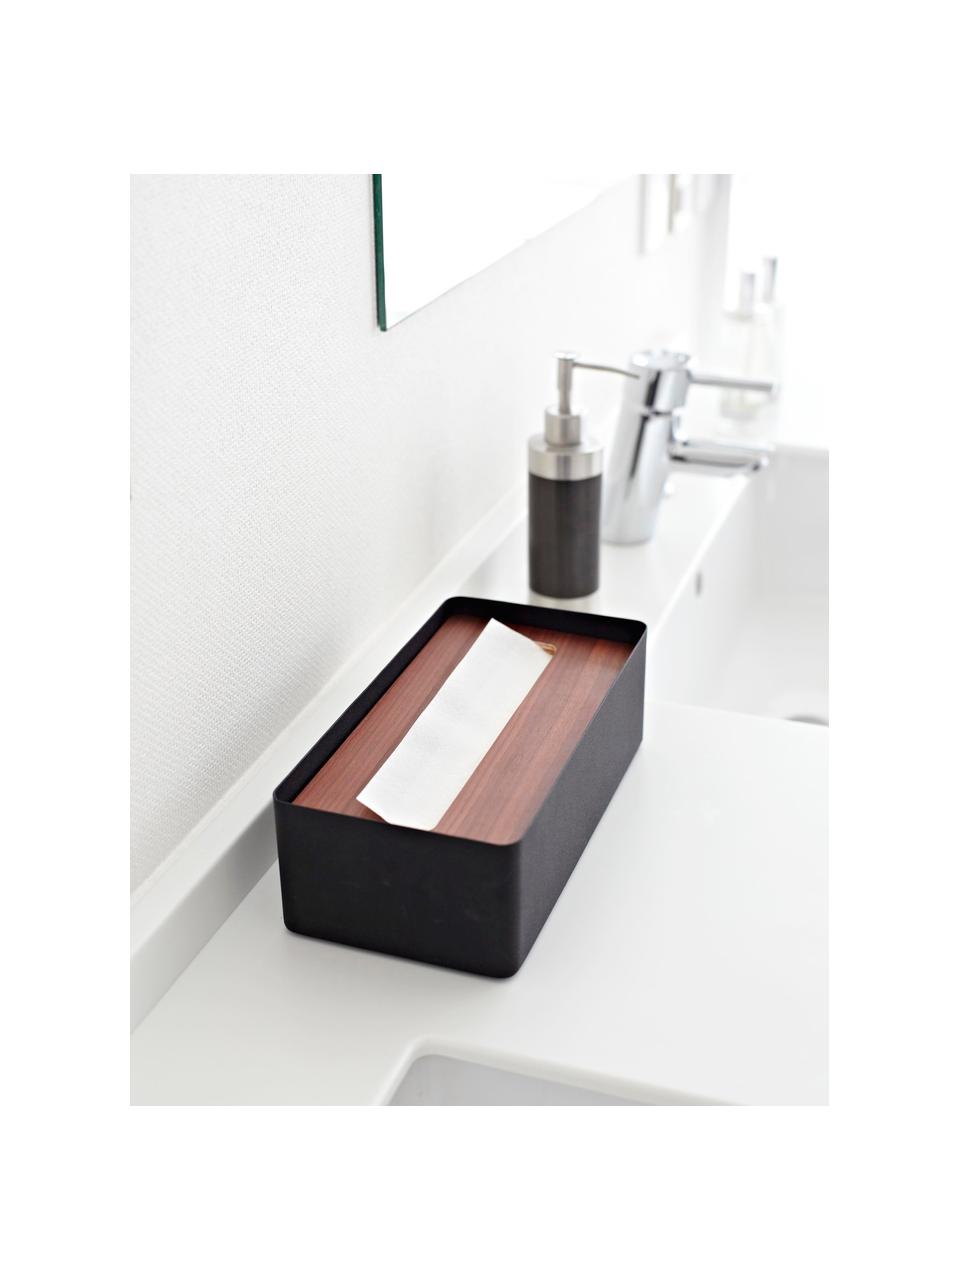 Kosmetiktuchbox Rin mit abnehmbaren Bambus-Deckel, Deckel: Holz, Box: Stahl, lackiert, Schwarz, Nougat, B 26 x T 13 cm